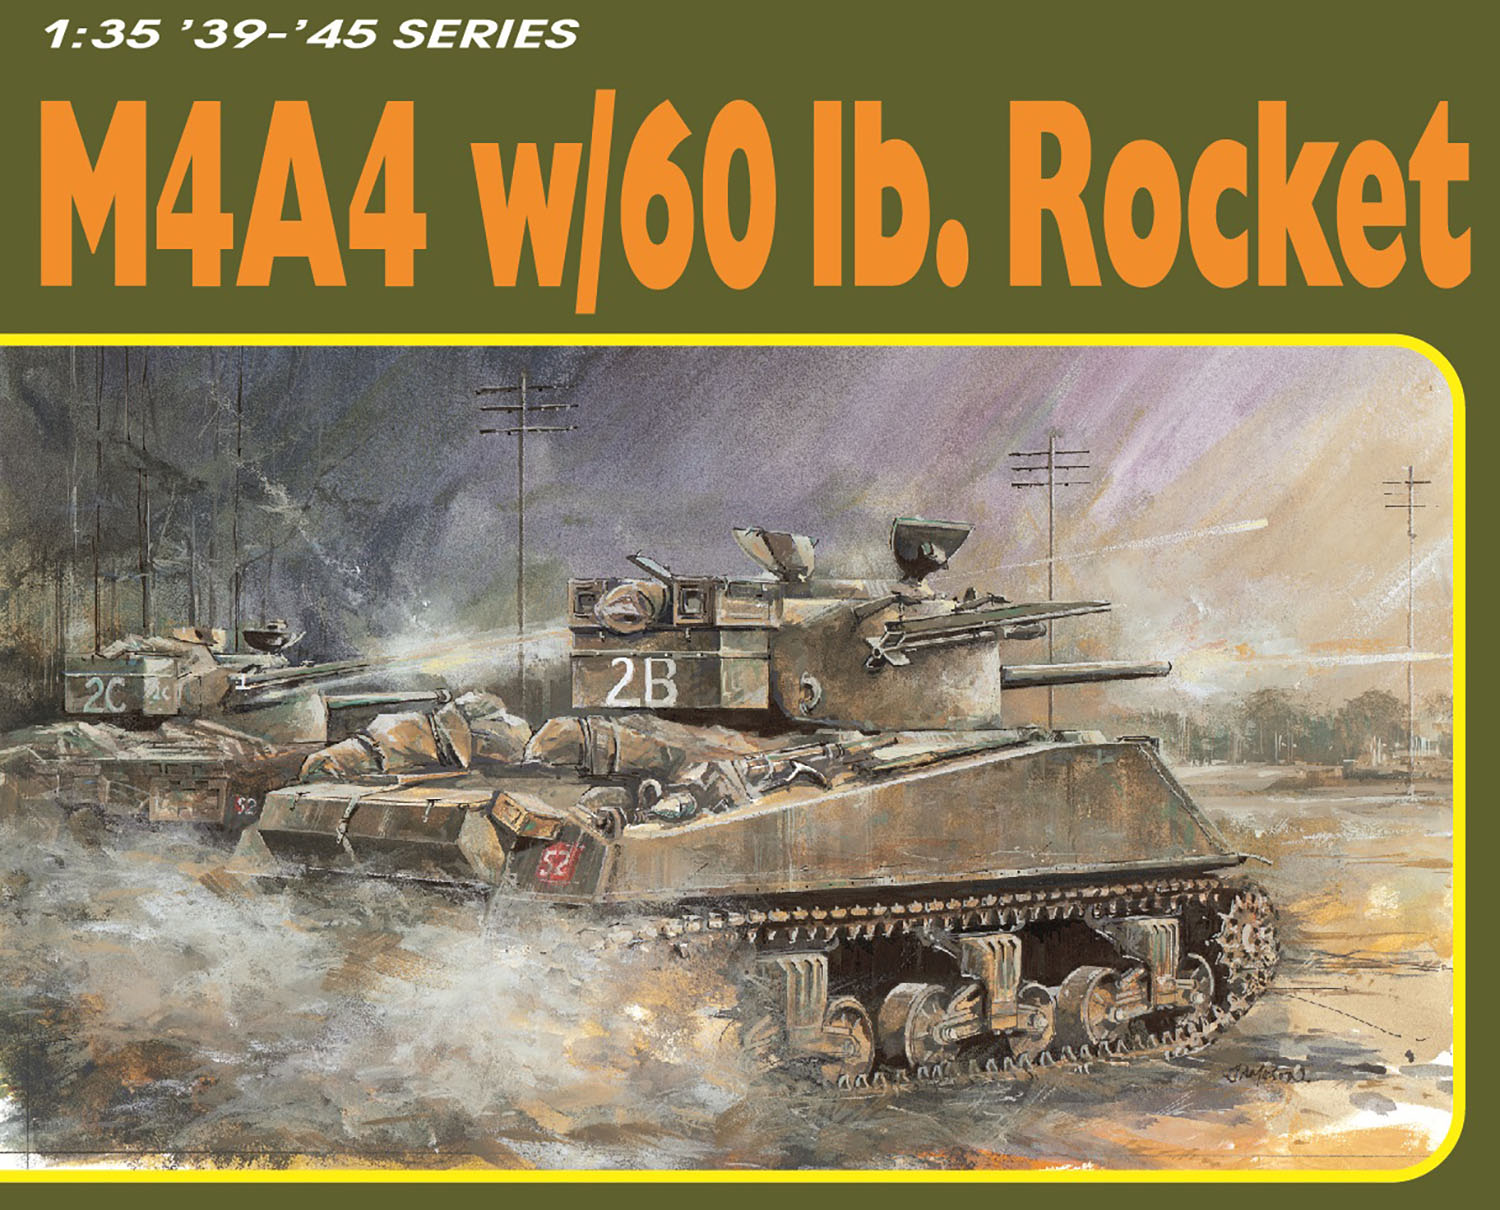 1/35 WW.II イギリス軍 M4A4 シャーマン 60ポンドロケット弾搭載型 アルミ砲身/フィギュア/3Dプリント付属 豪華セット